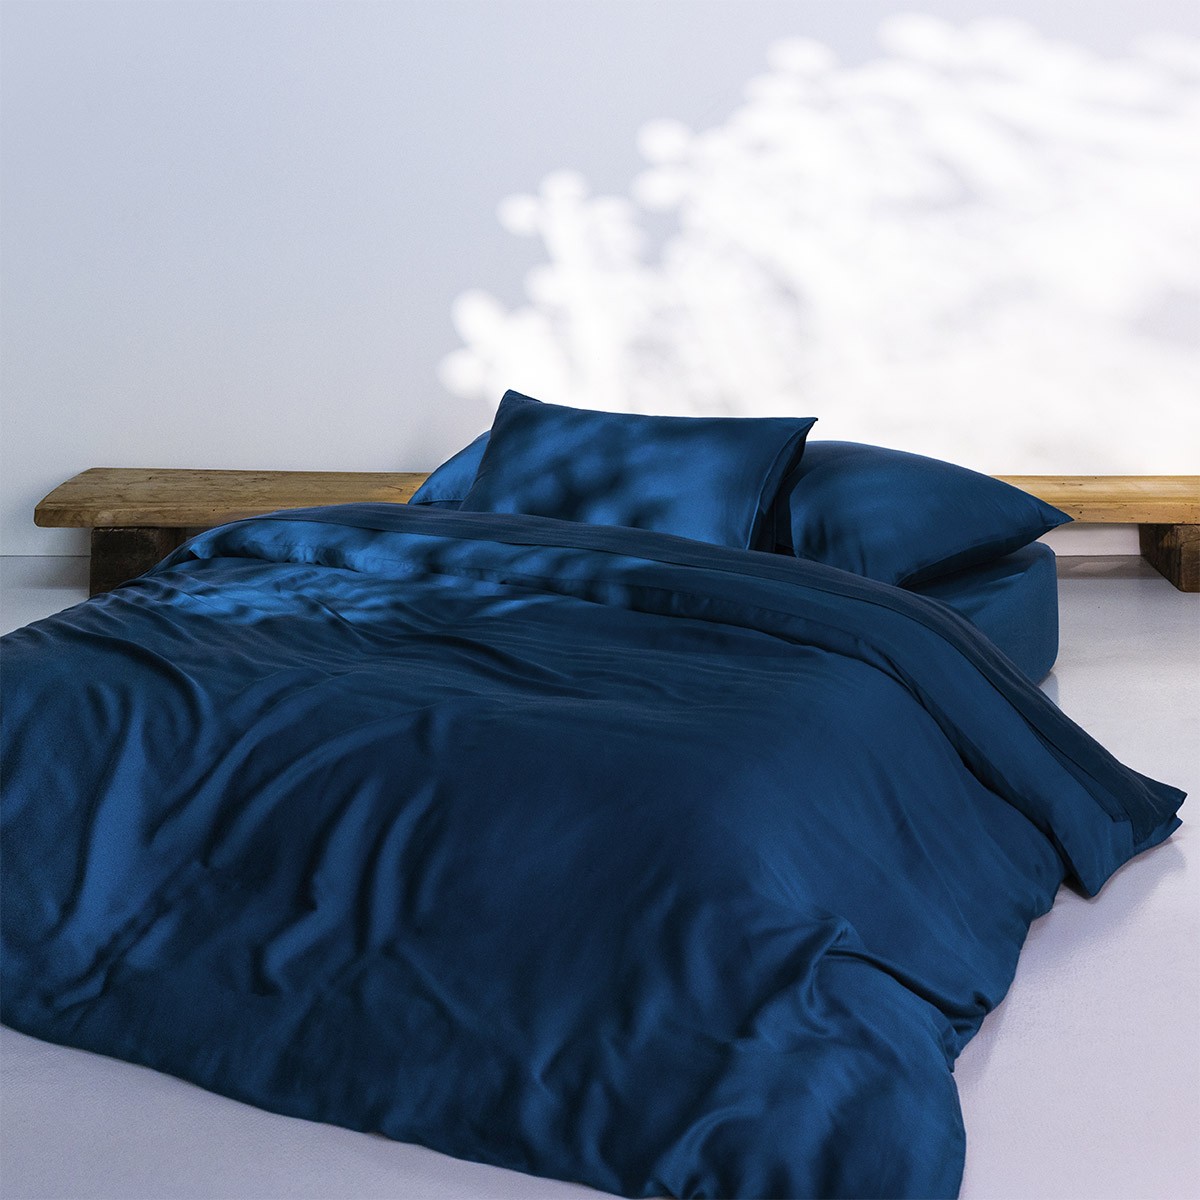 Bed Linen K Hanadot 